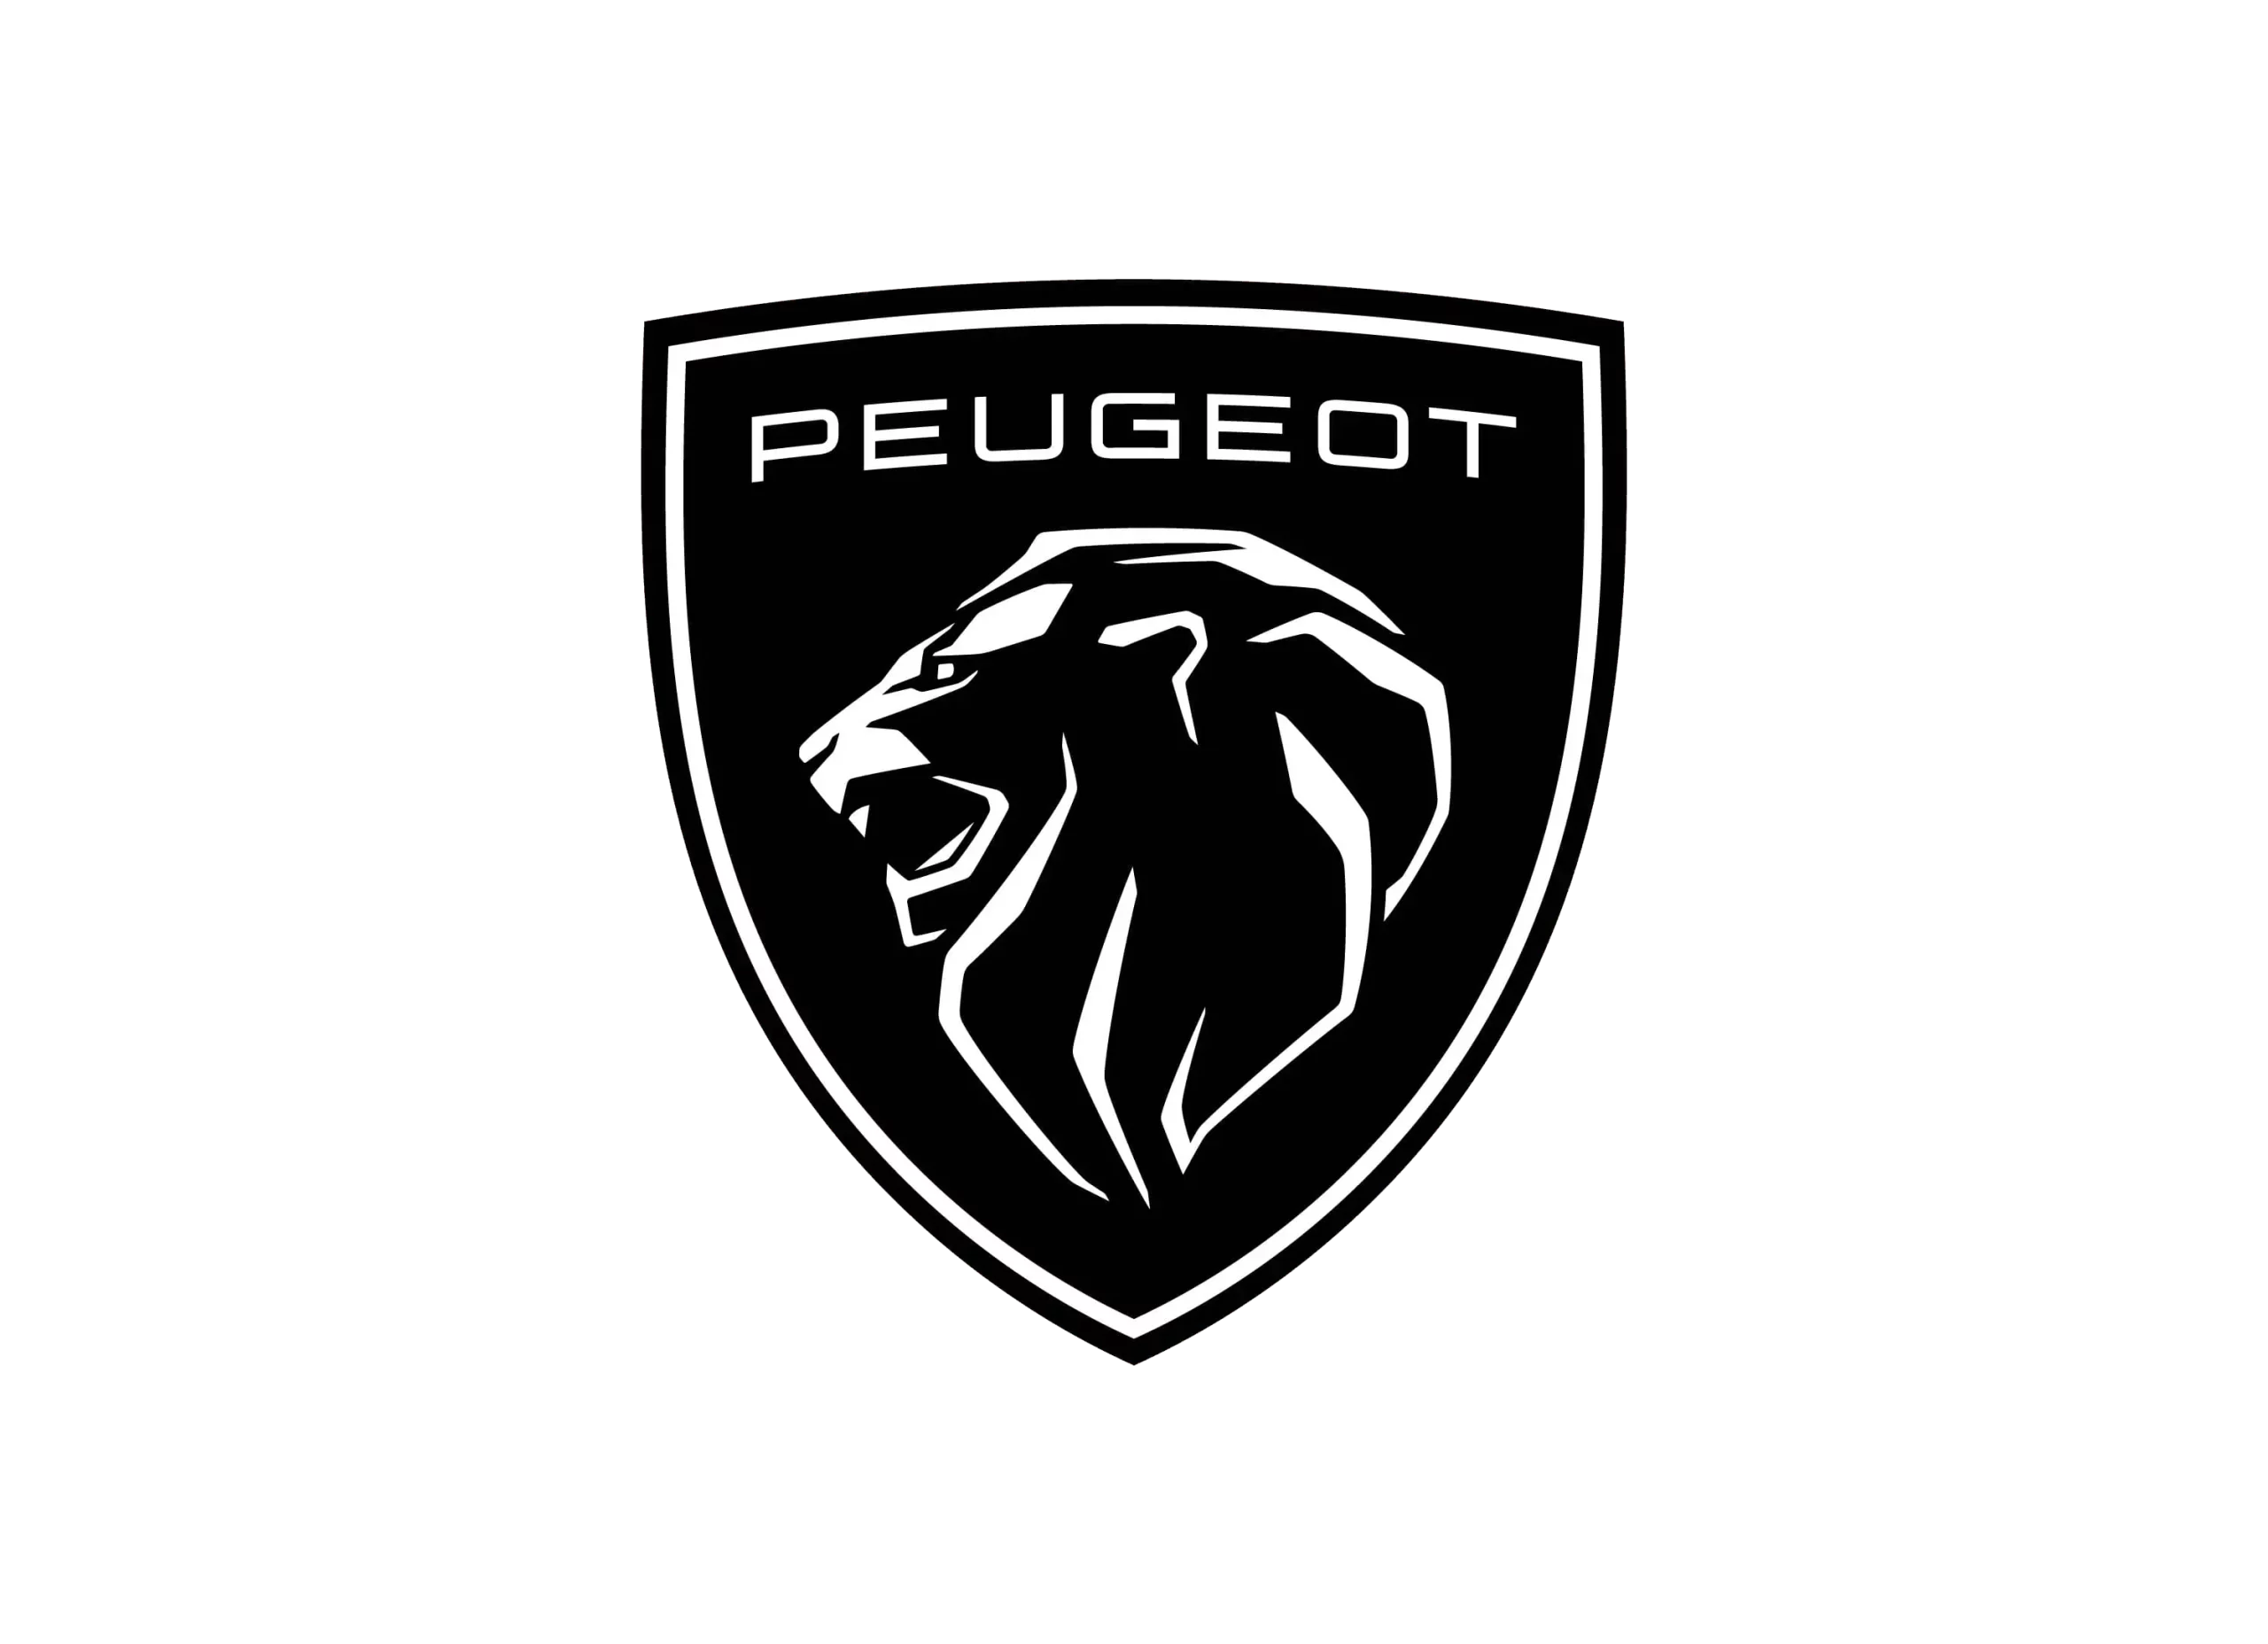 Peugeot logo 2021-present